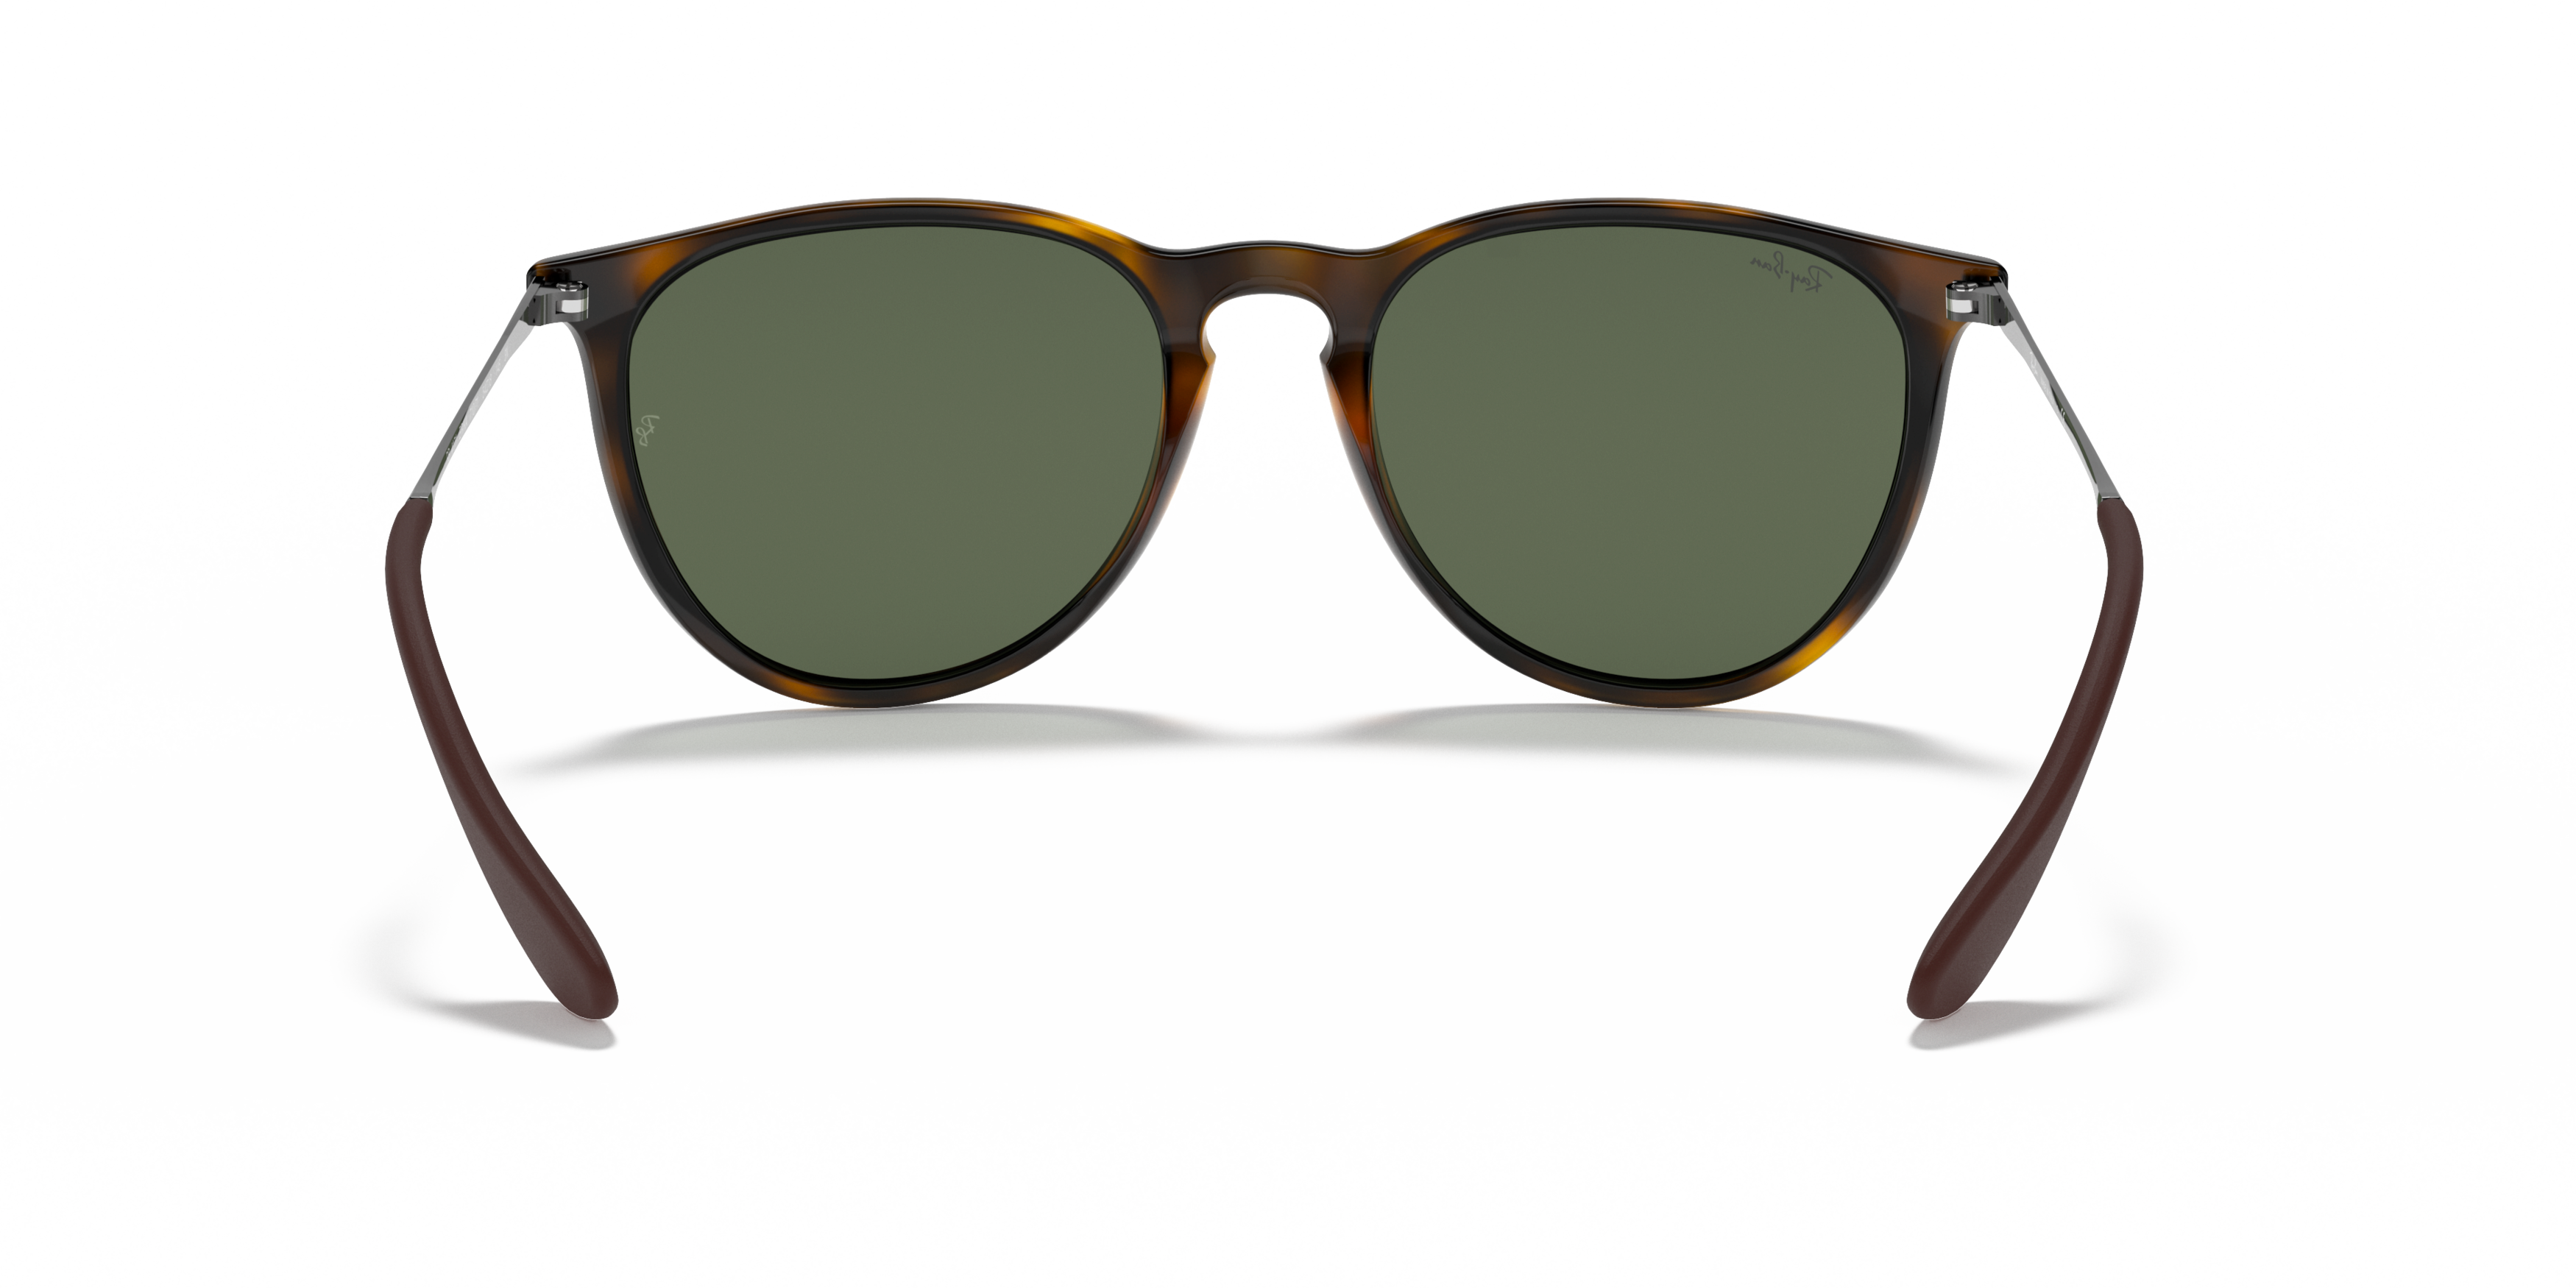 Detail02 Ray-Ban Erika RB 4171 (710/71) Sunglasses Green / Tortoise Shell